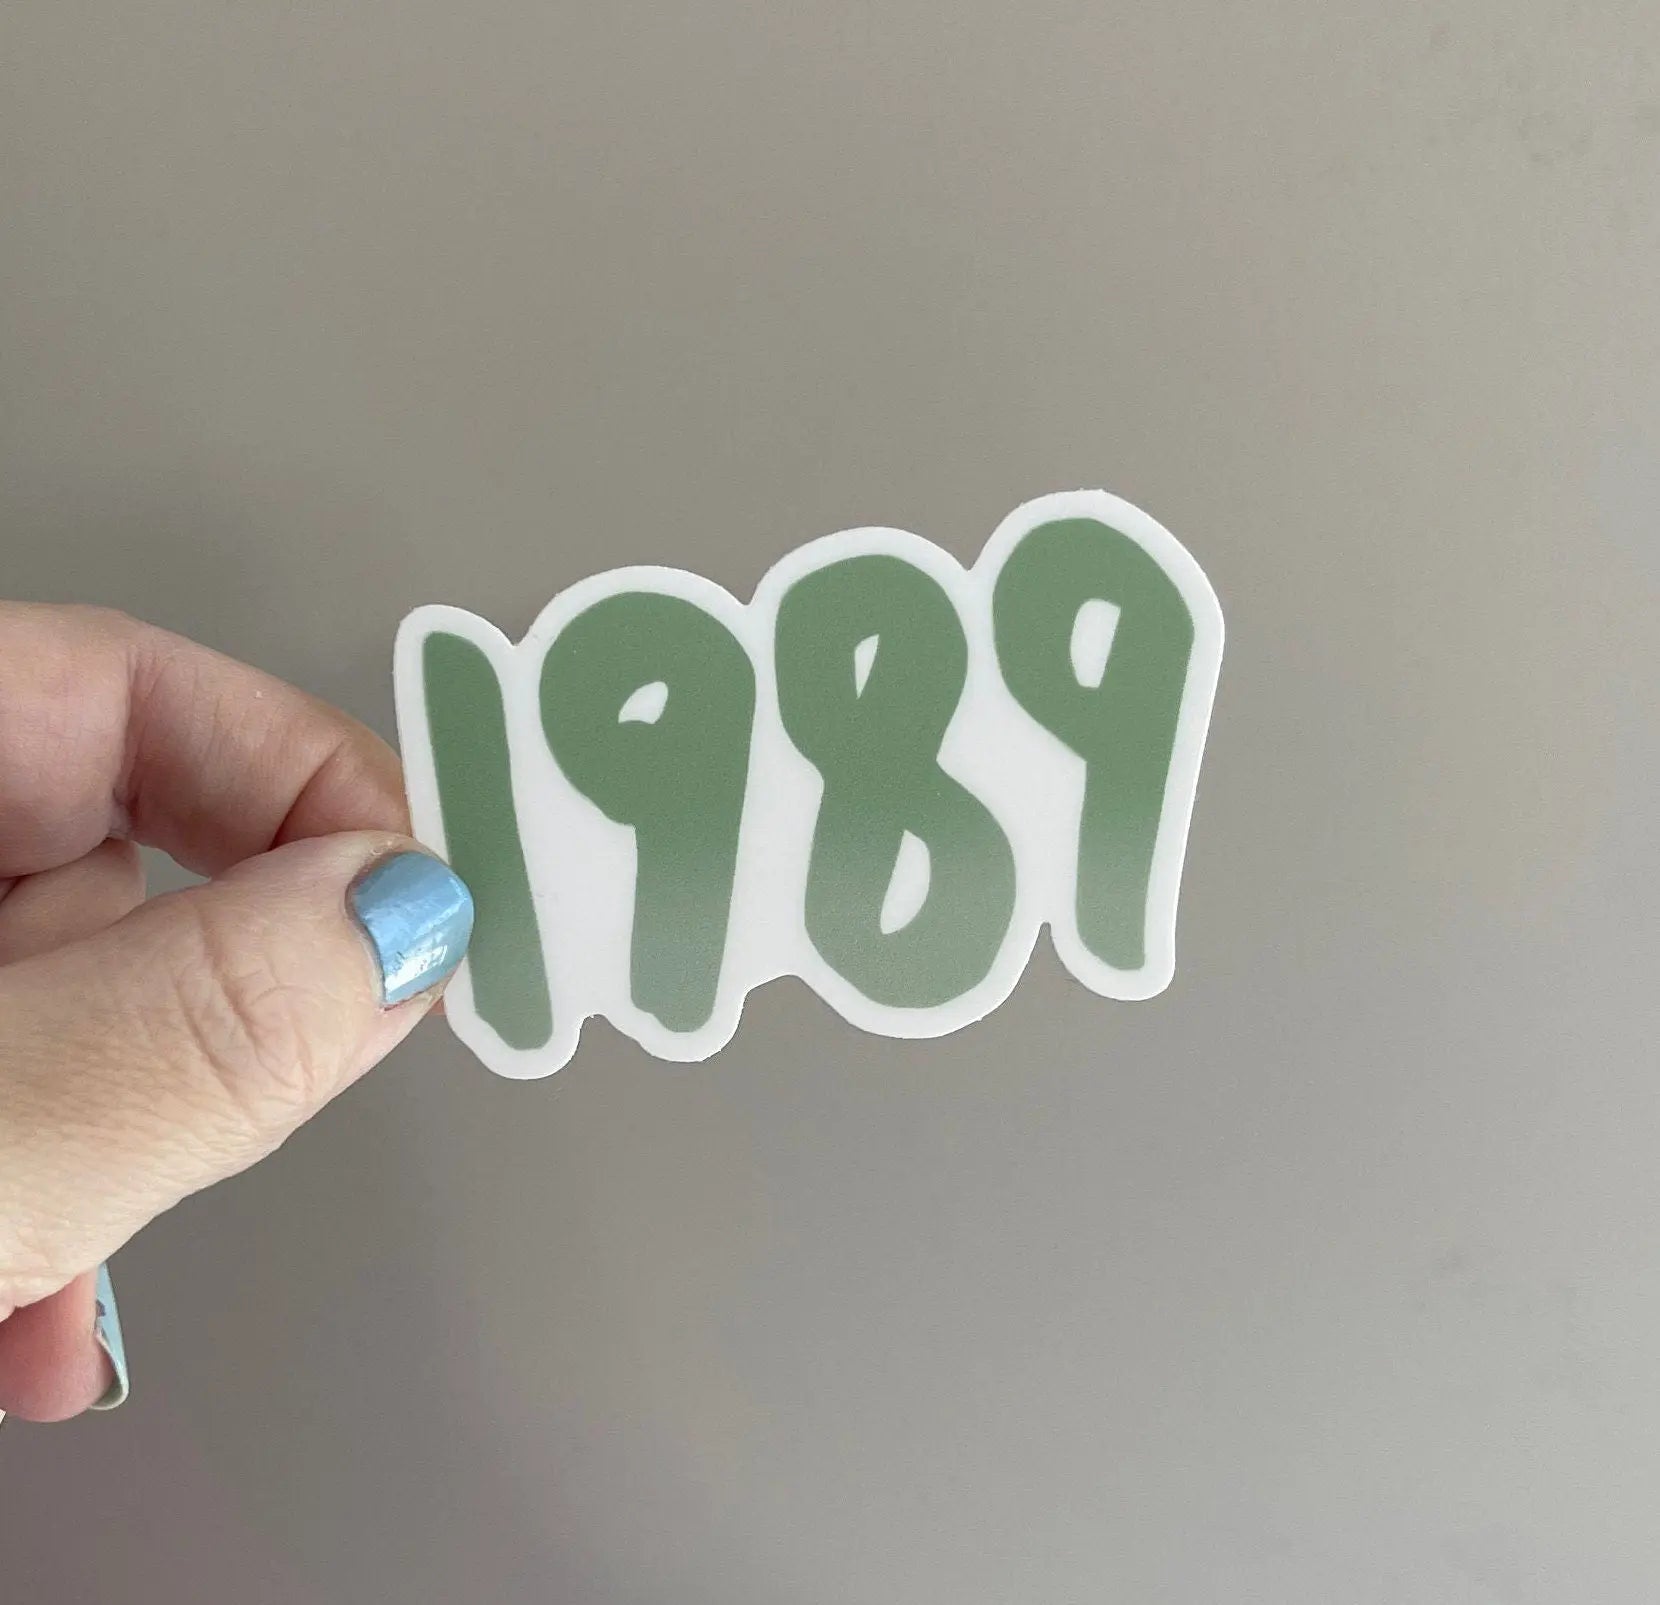 1989 sticker - green MangoIllustrated